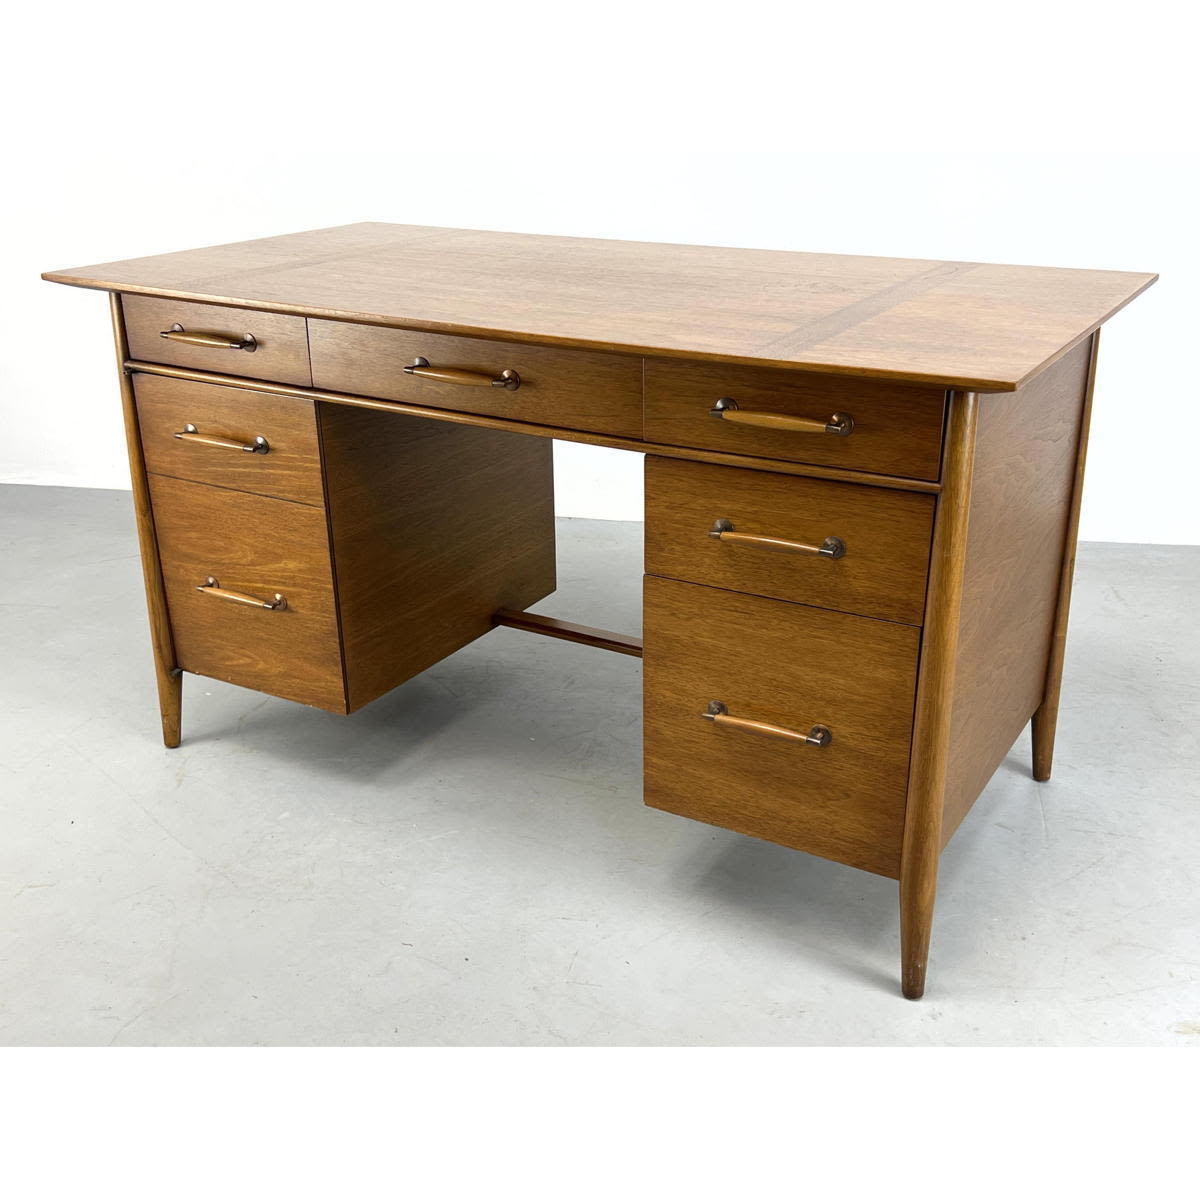 HENREDON American Modern Desk. Wood